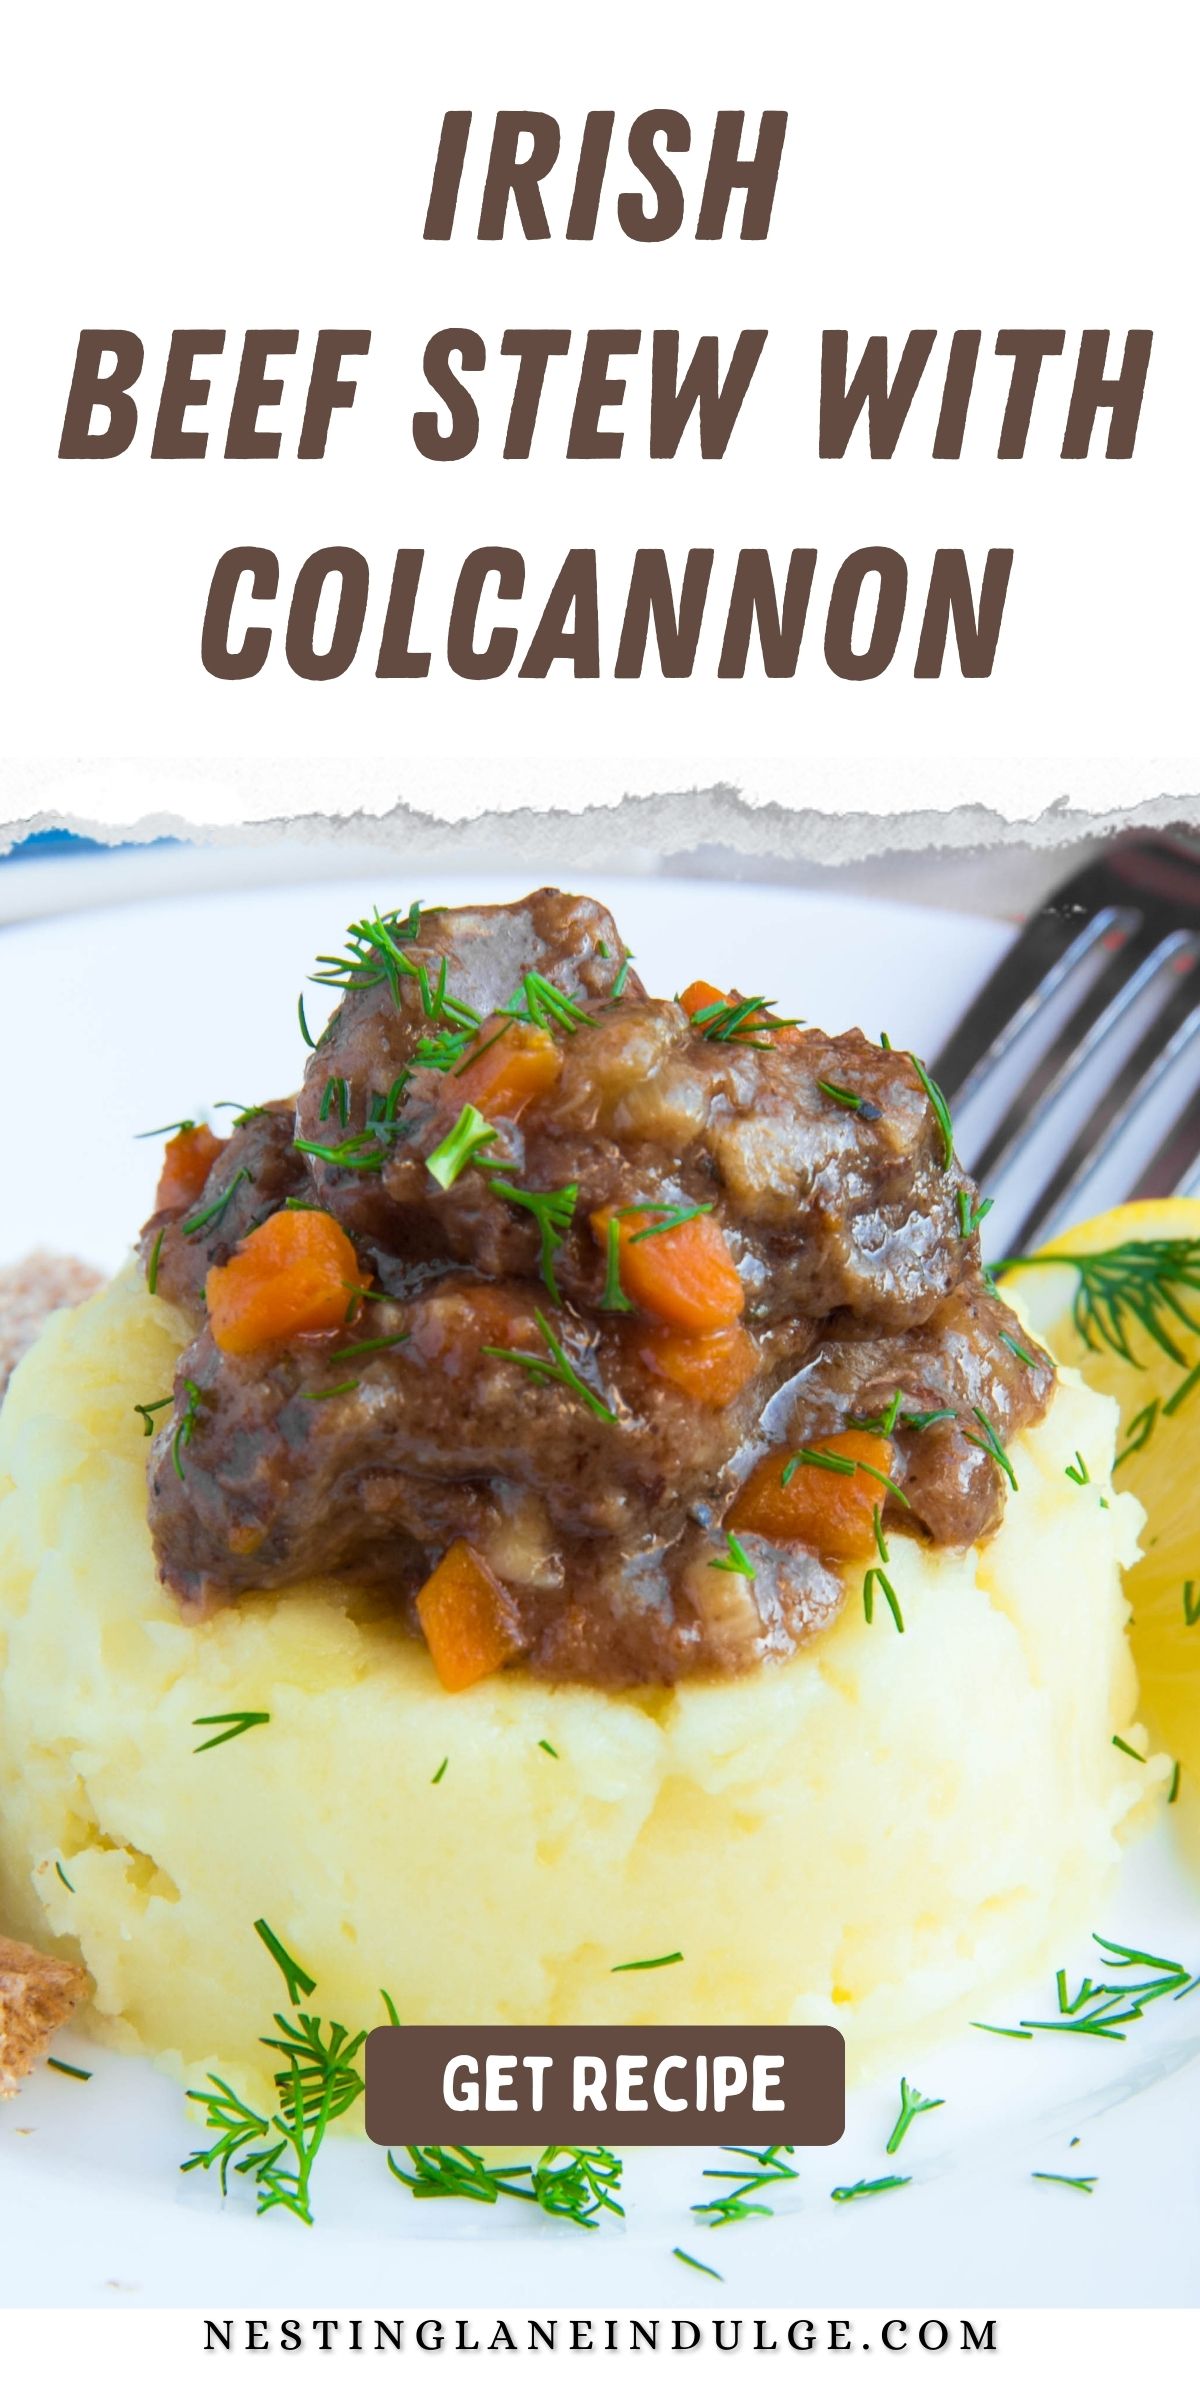 Irish Beef Stew with Colcannon Recipe Graphic.